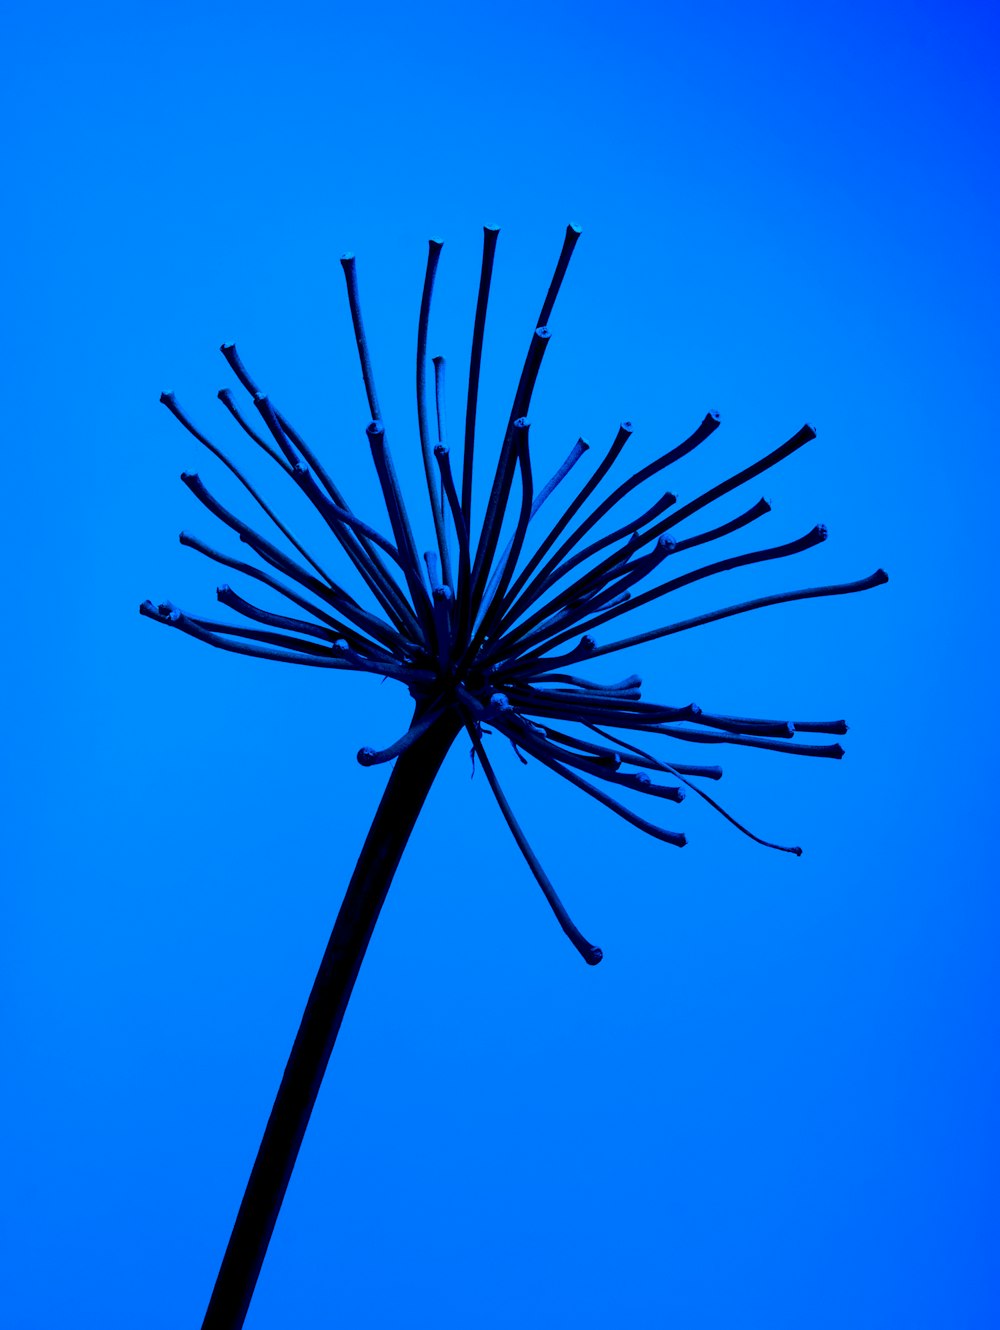 a blue flower head against a blue sky